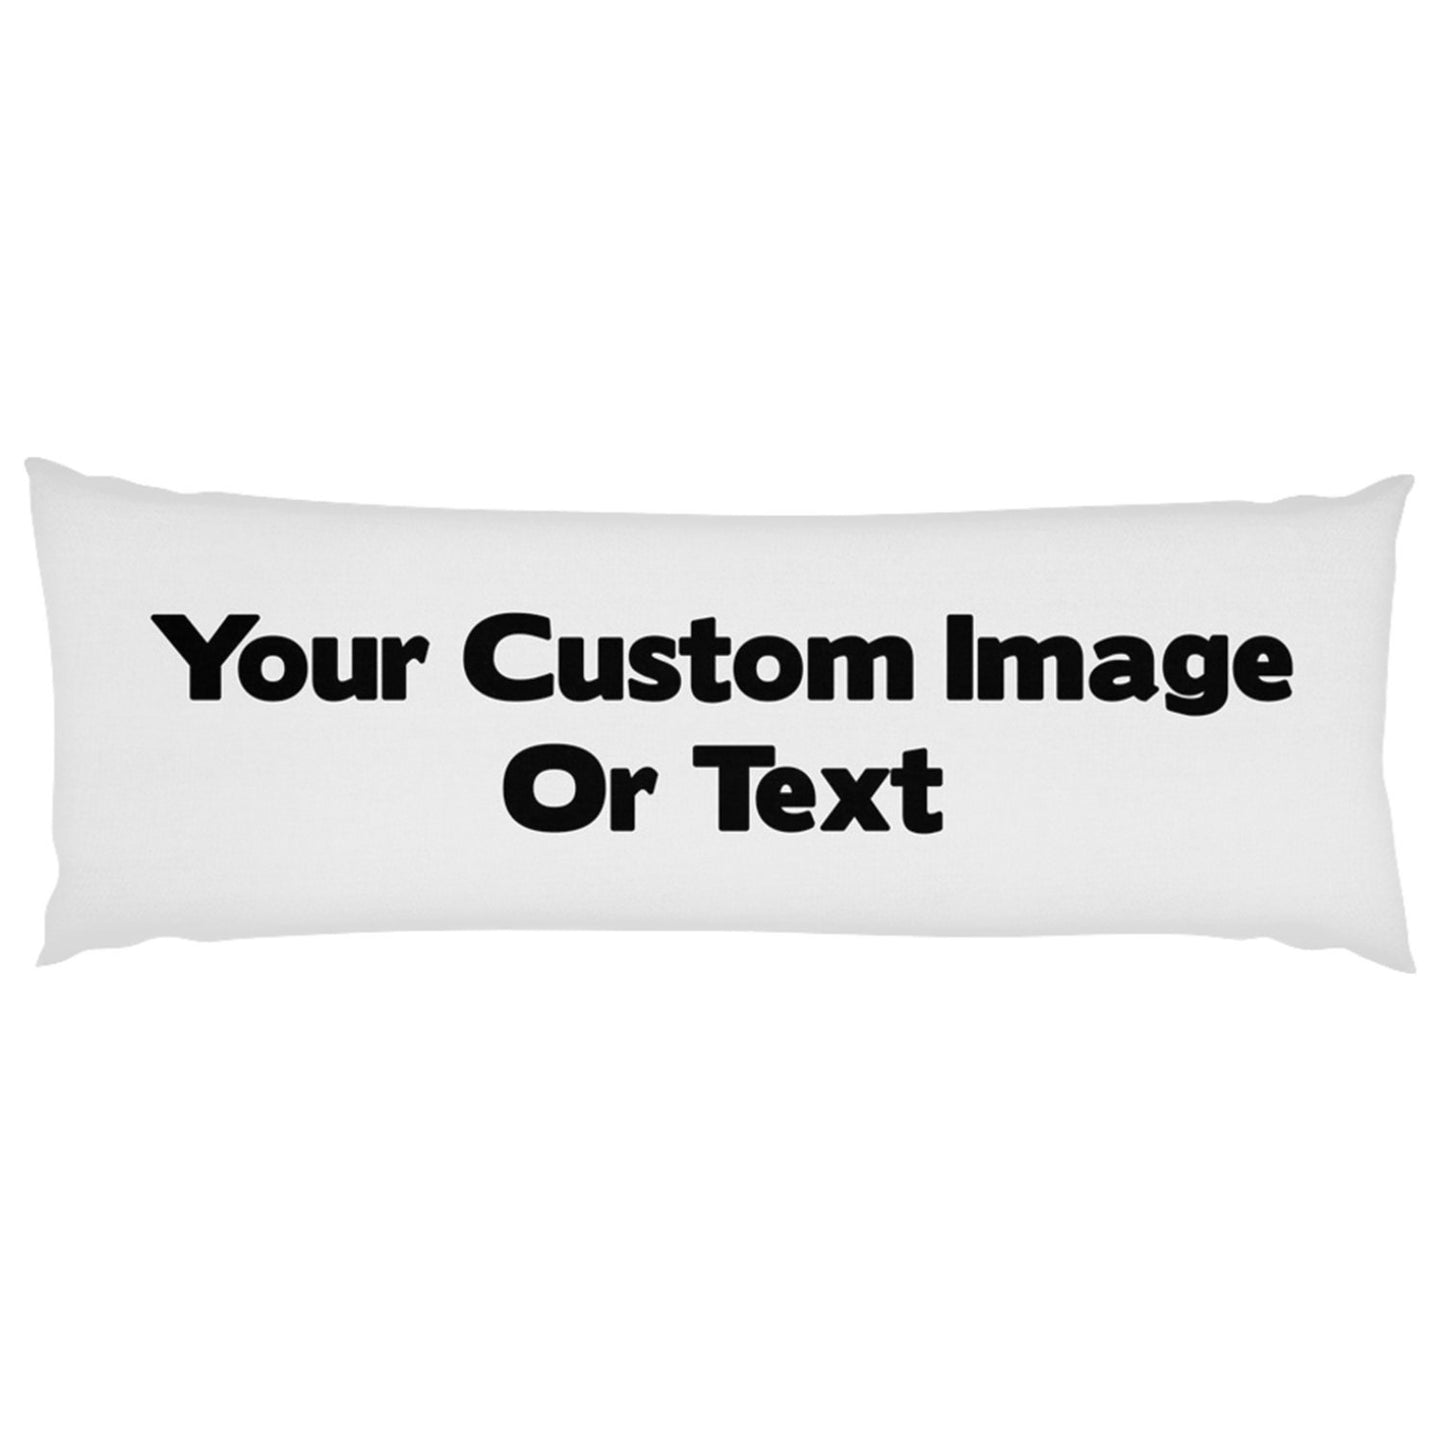 Custom Body Pillow custom image bed pillow personalized body pillow customized body pillow photo body pillow personalised long pillow